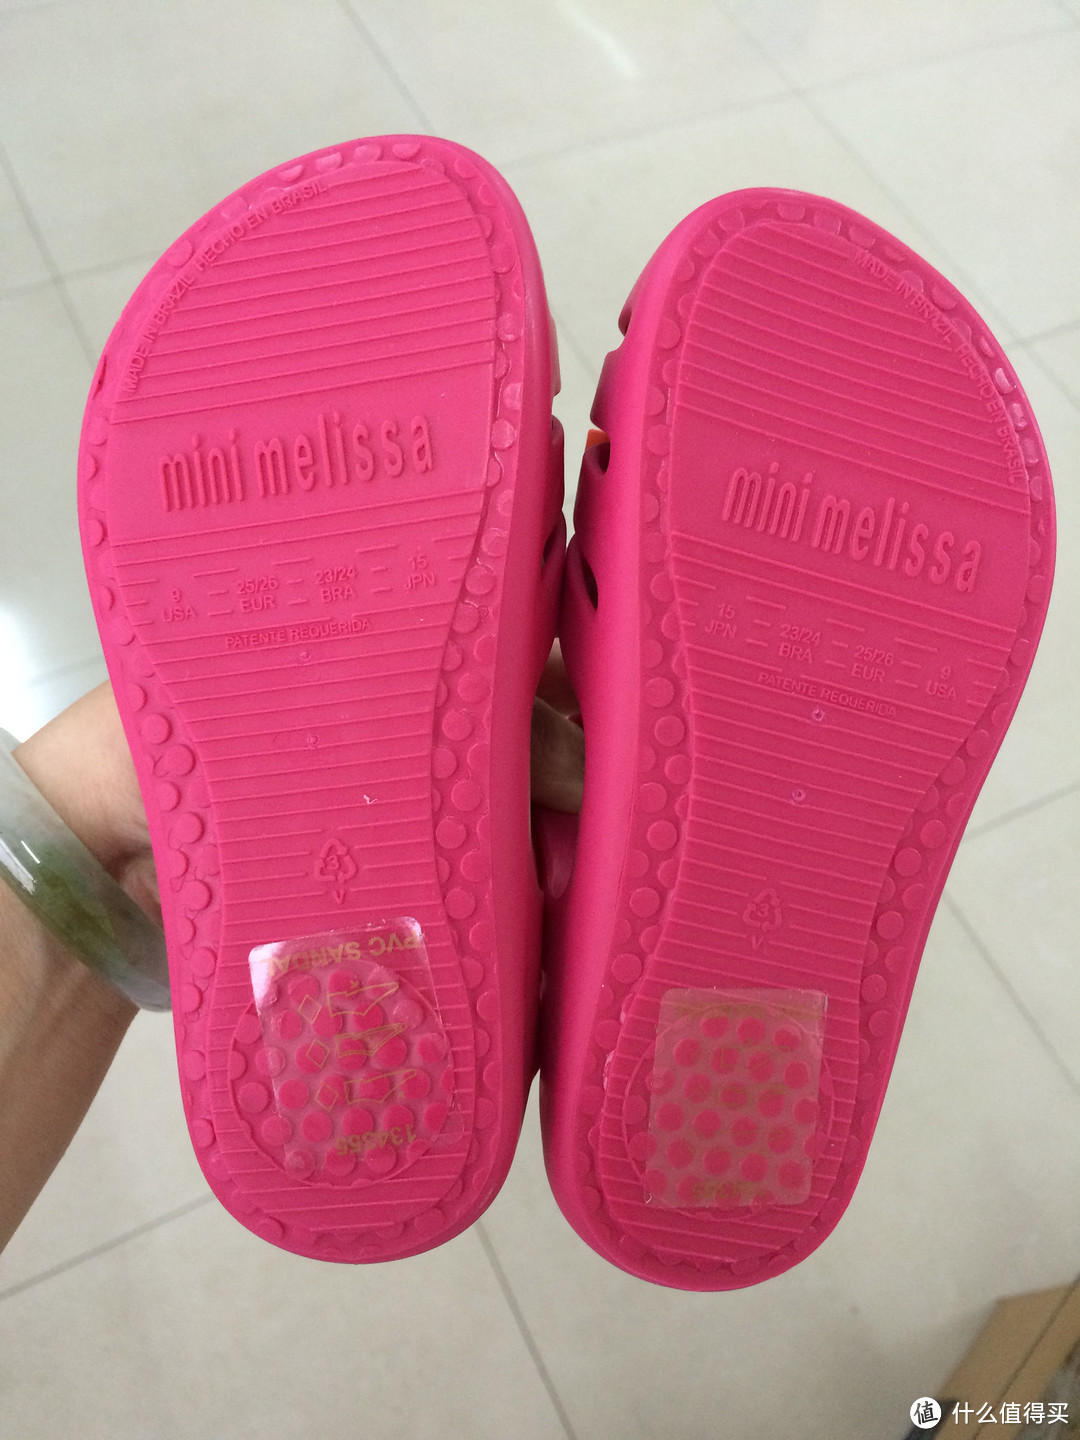 Mini Melissa和mel Dreamed by melissa 女款凉鞋